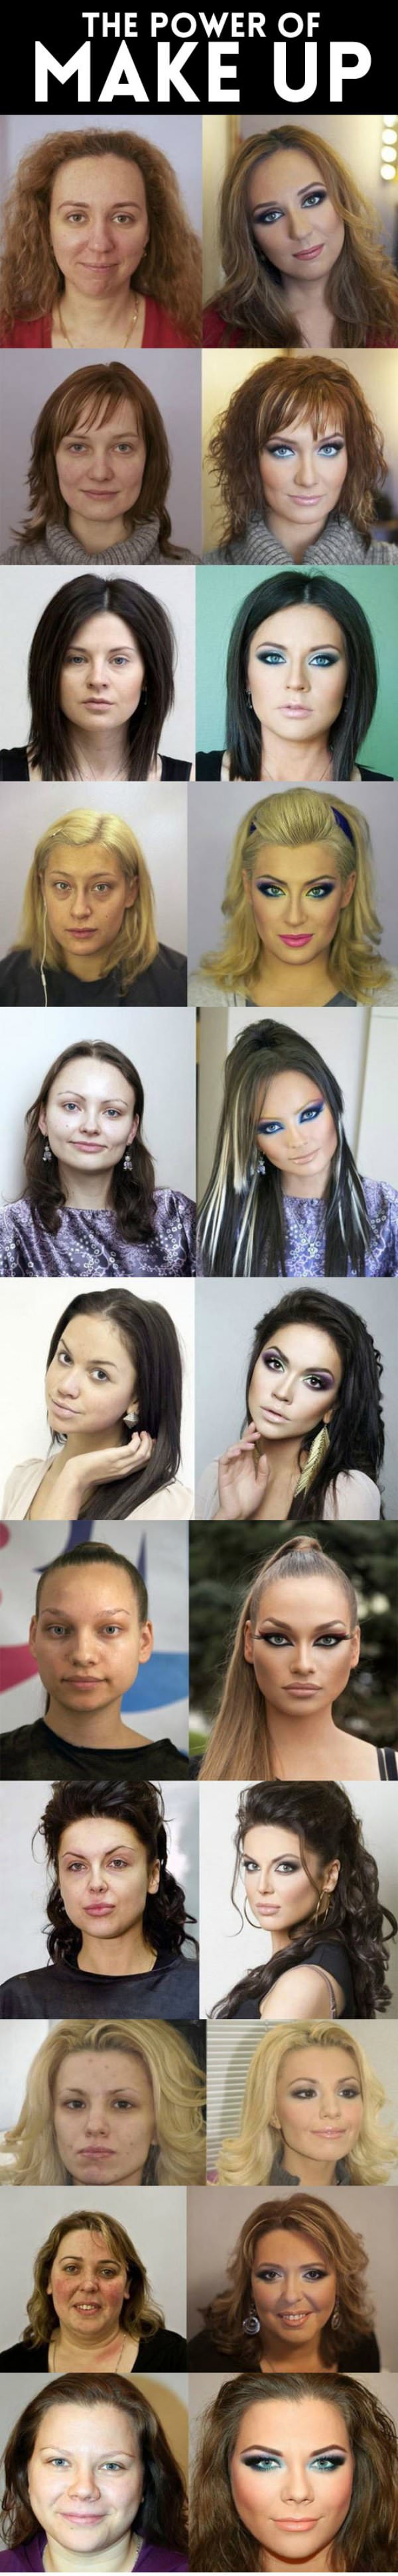 power-of-makeup.jpg